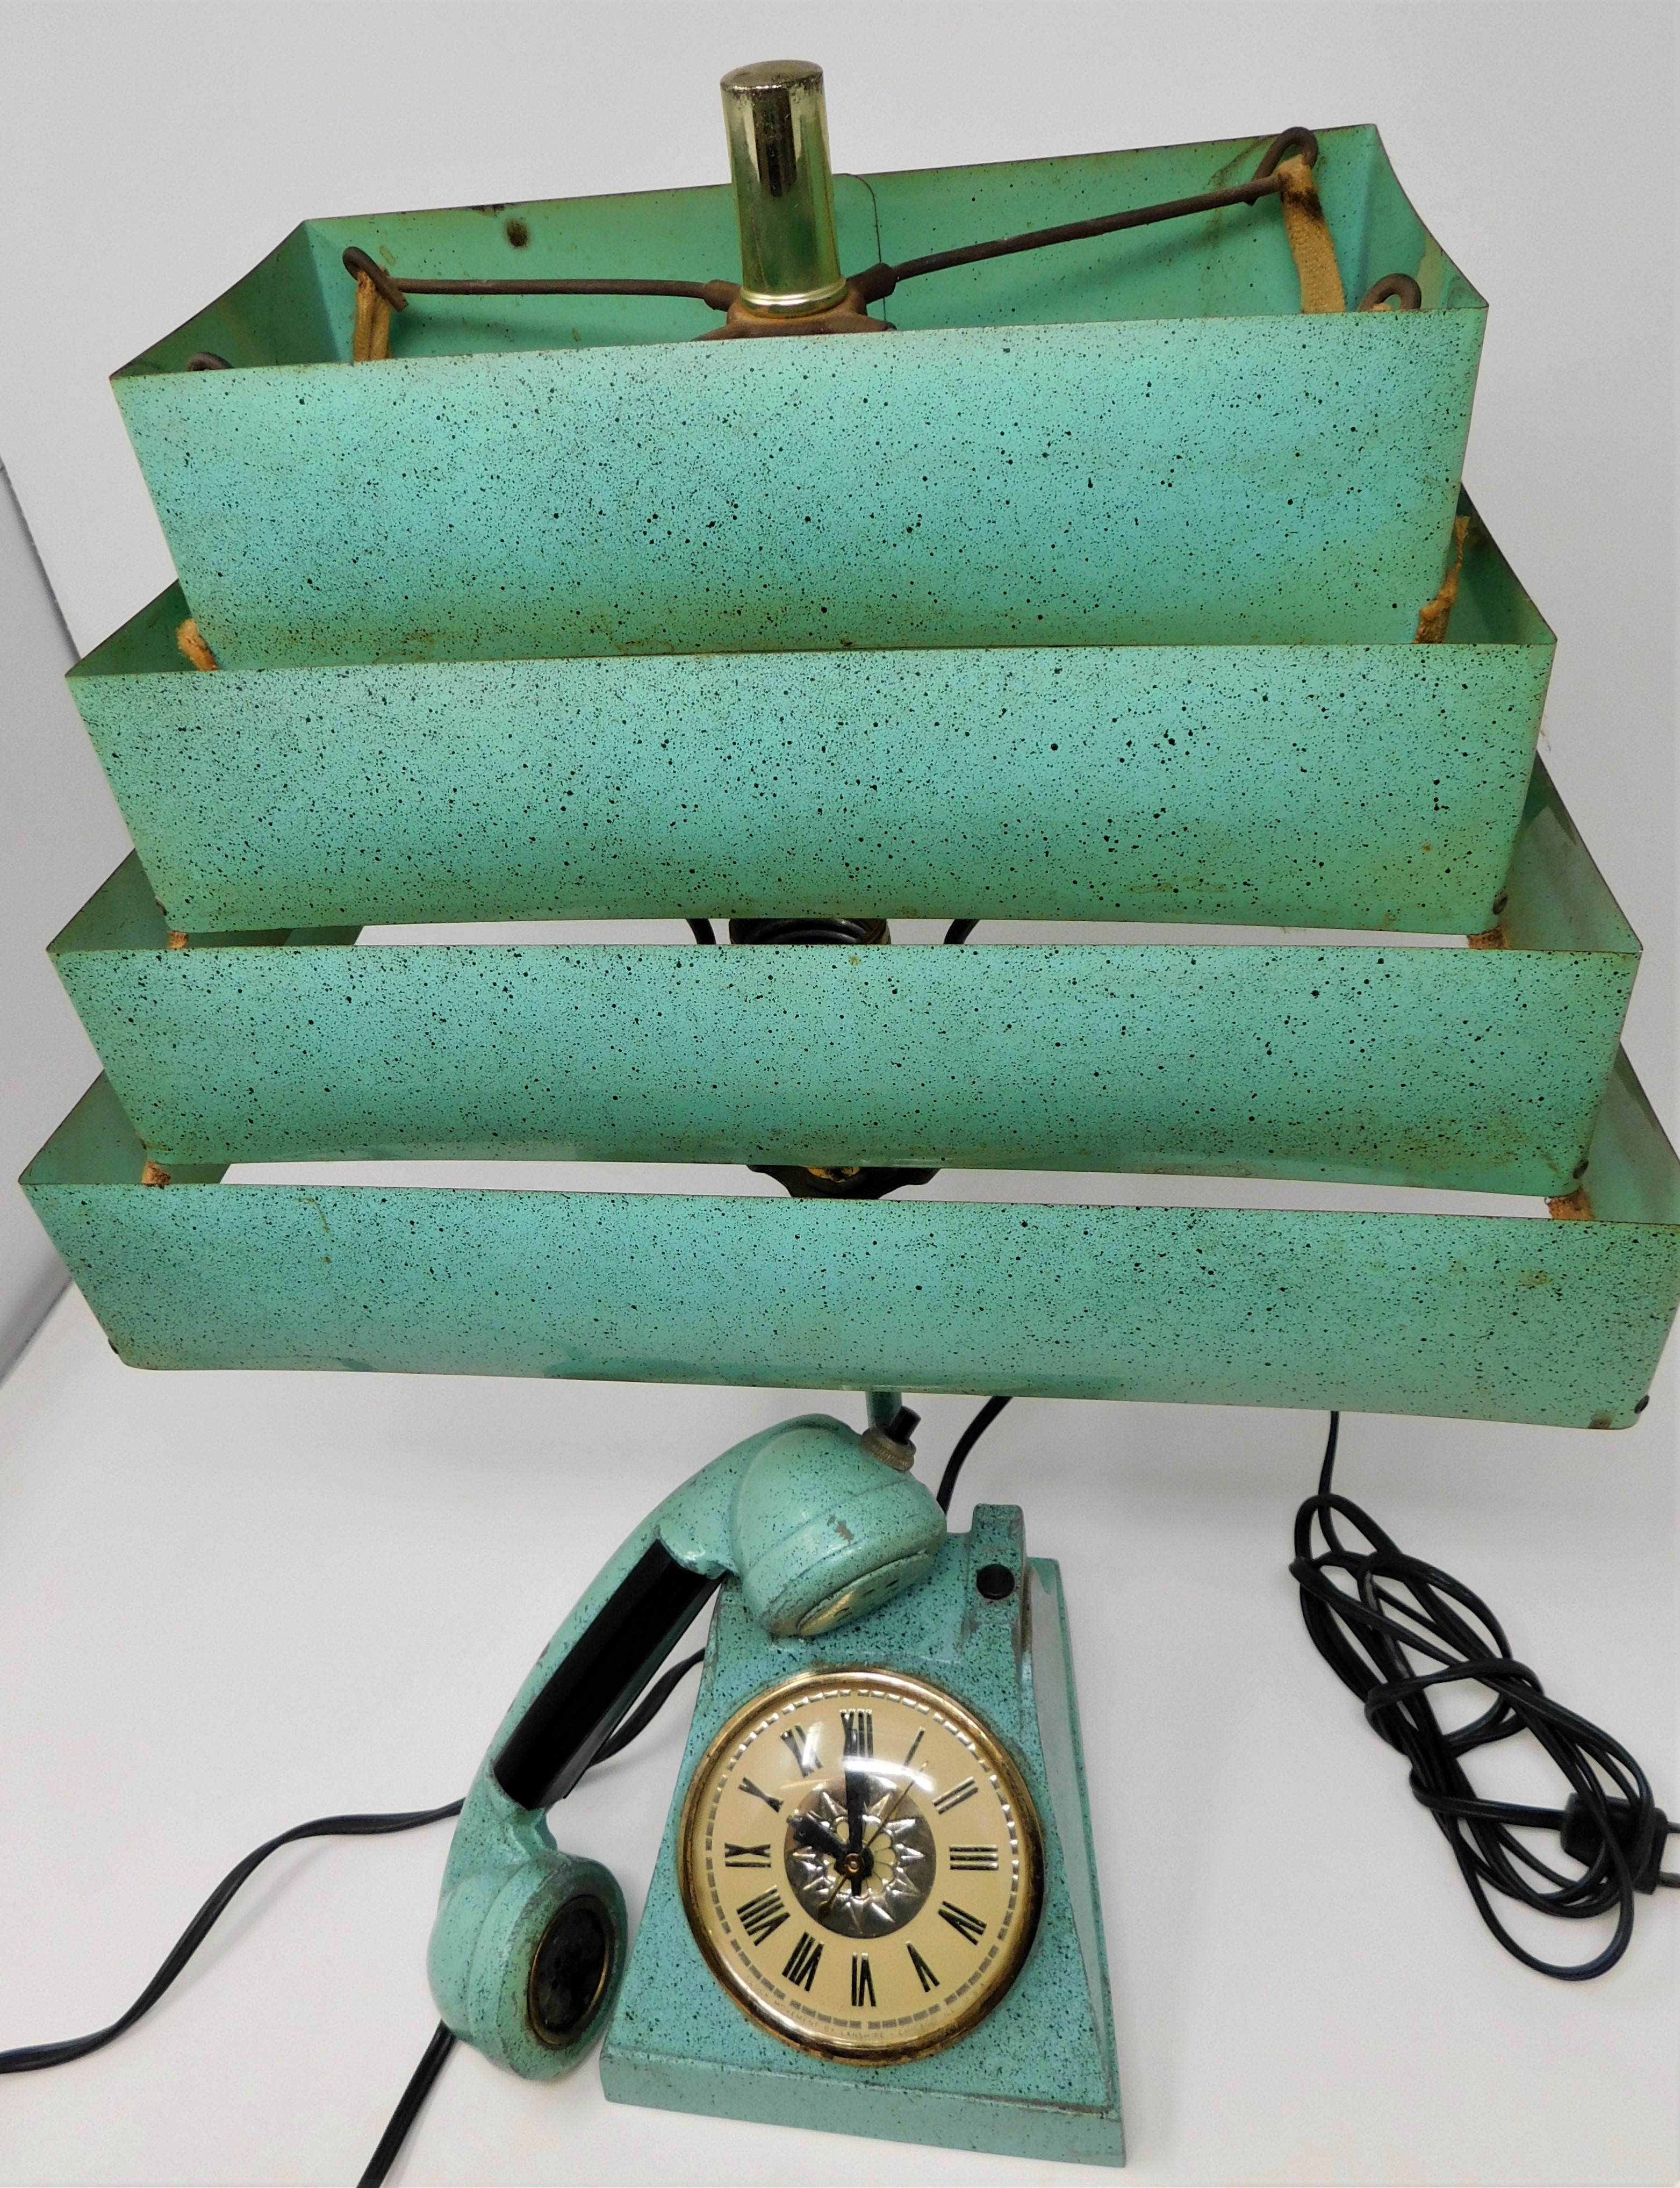 Metal Vintage Trea Boye Kitsch Lighter Telephone Clock Teal Lamp Venetian Blind Shade